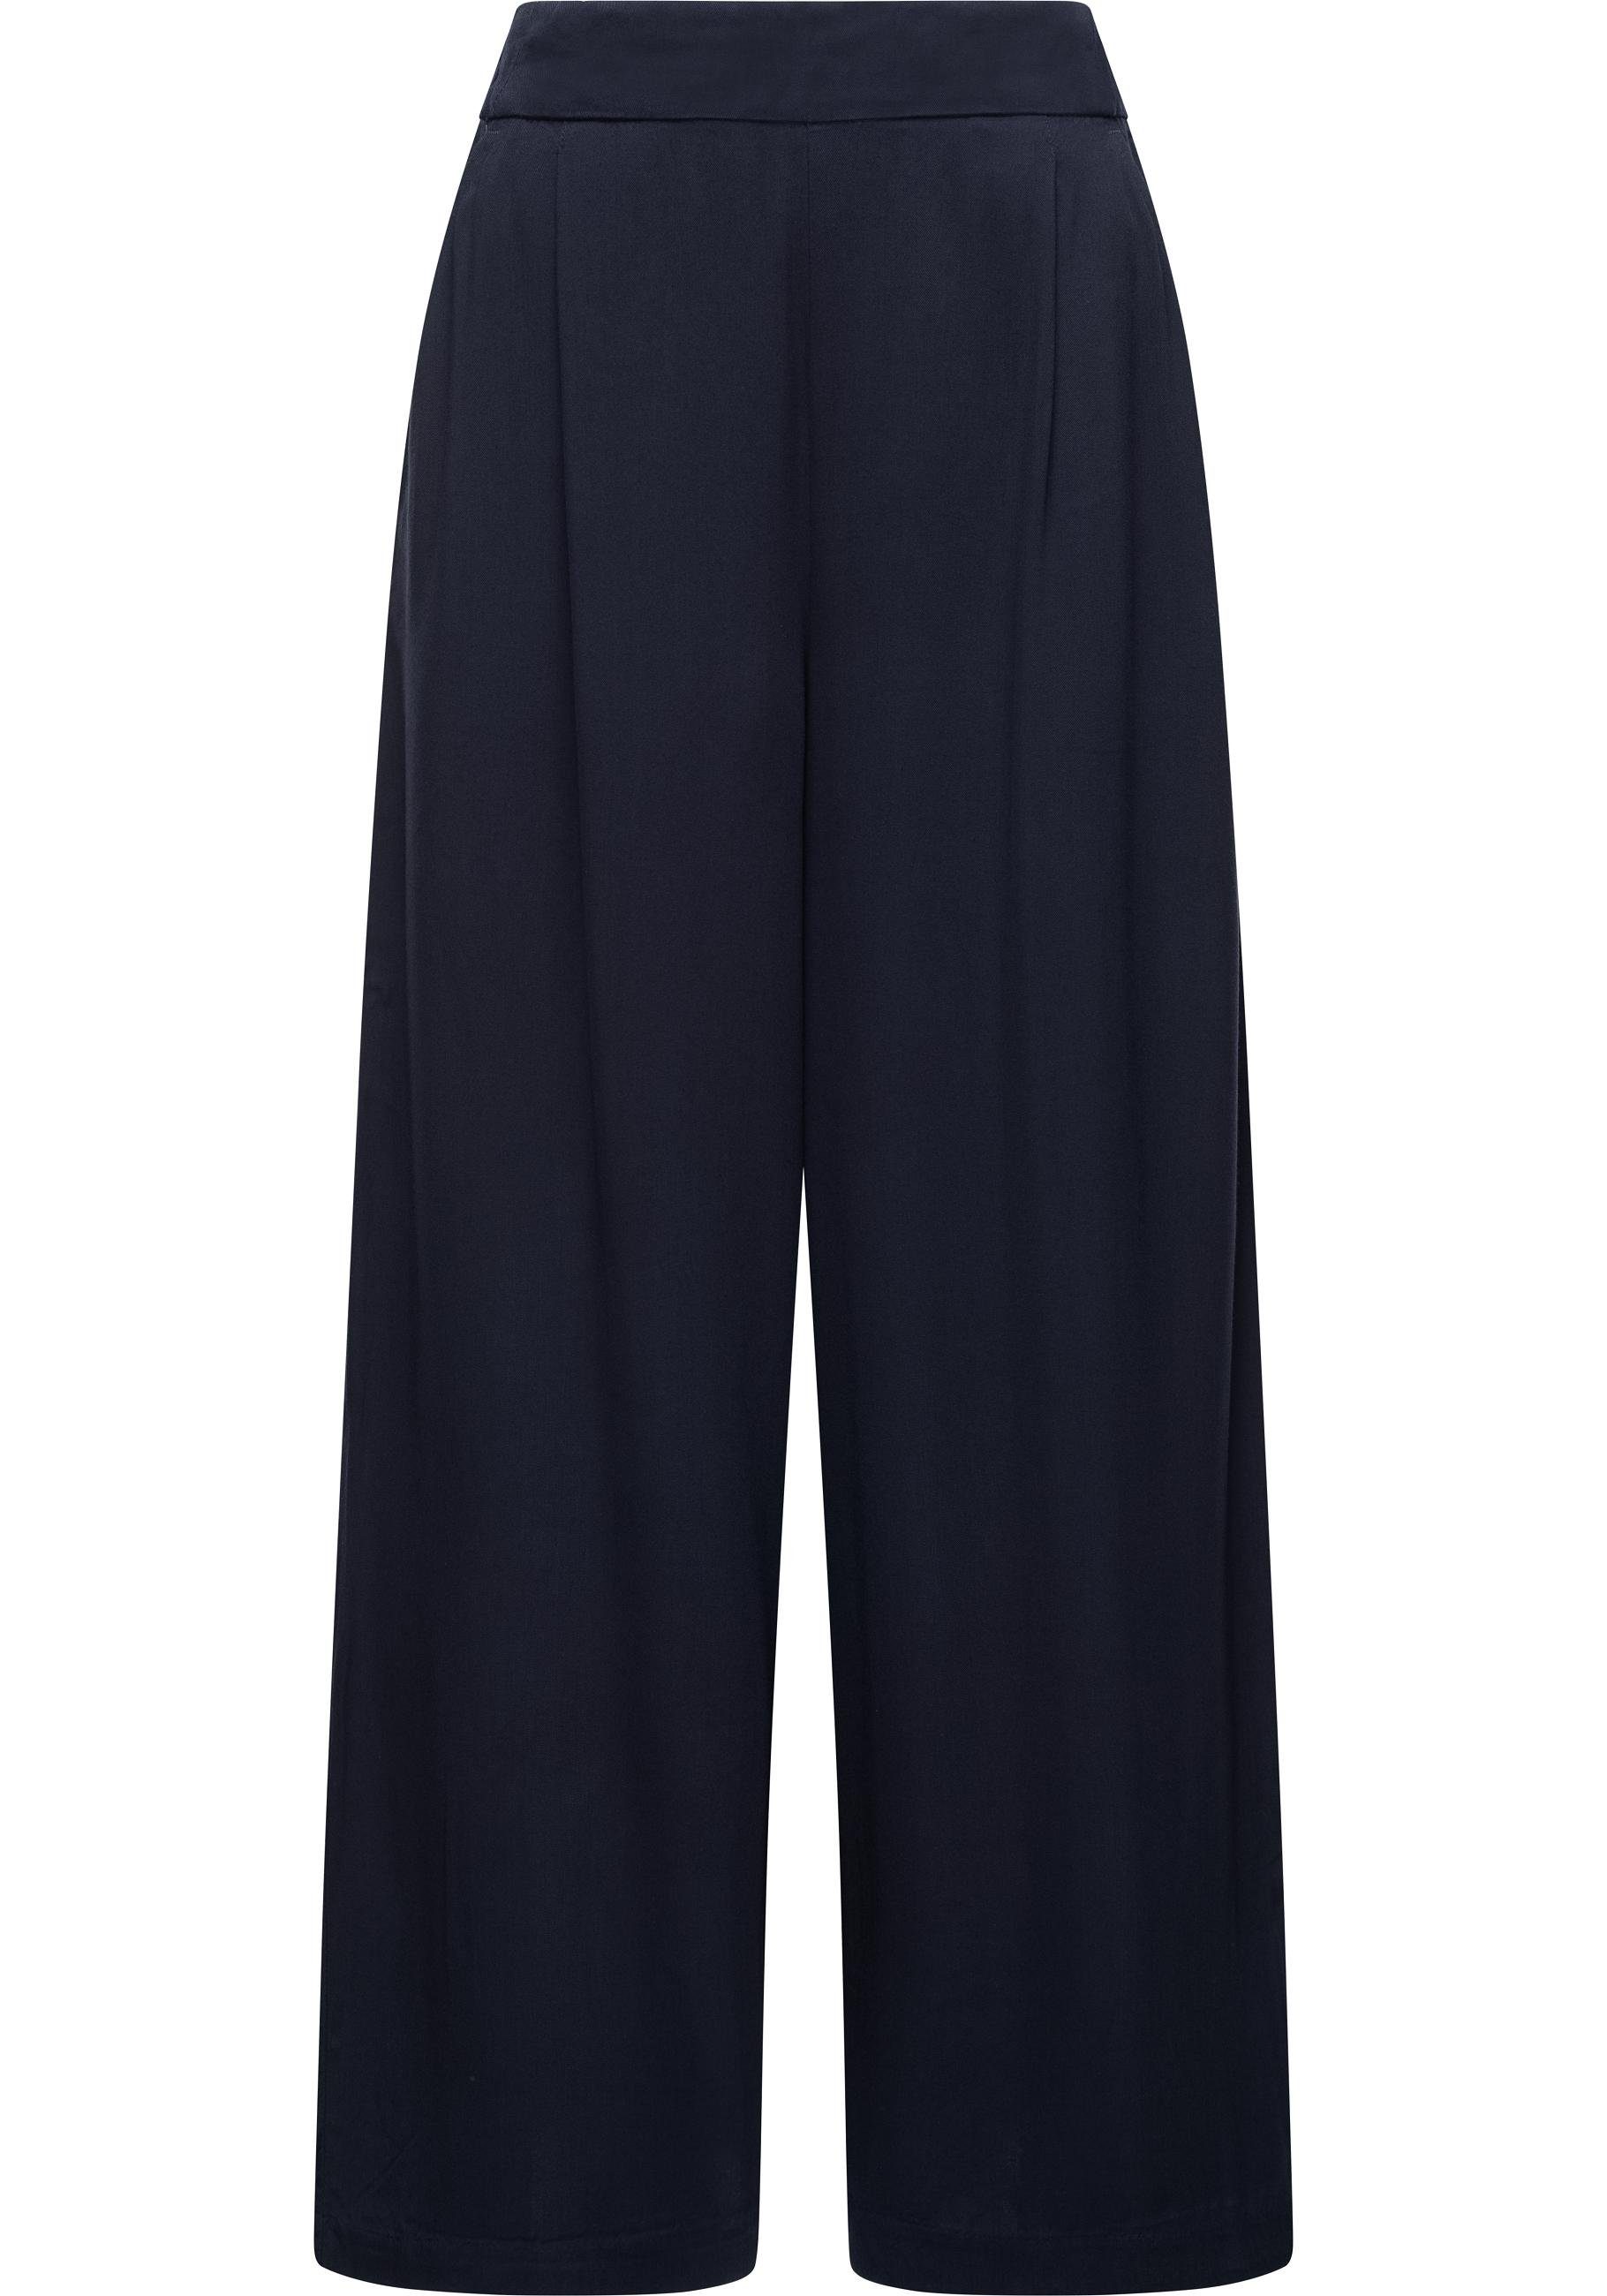 Ragwear Stoffhose Loggan Stylische Culotte Hose mit Gürtel dunkelblau